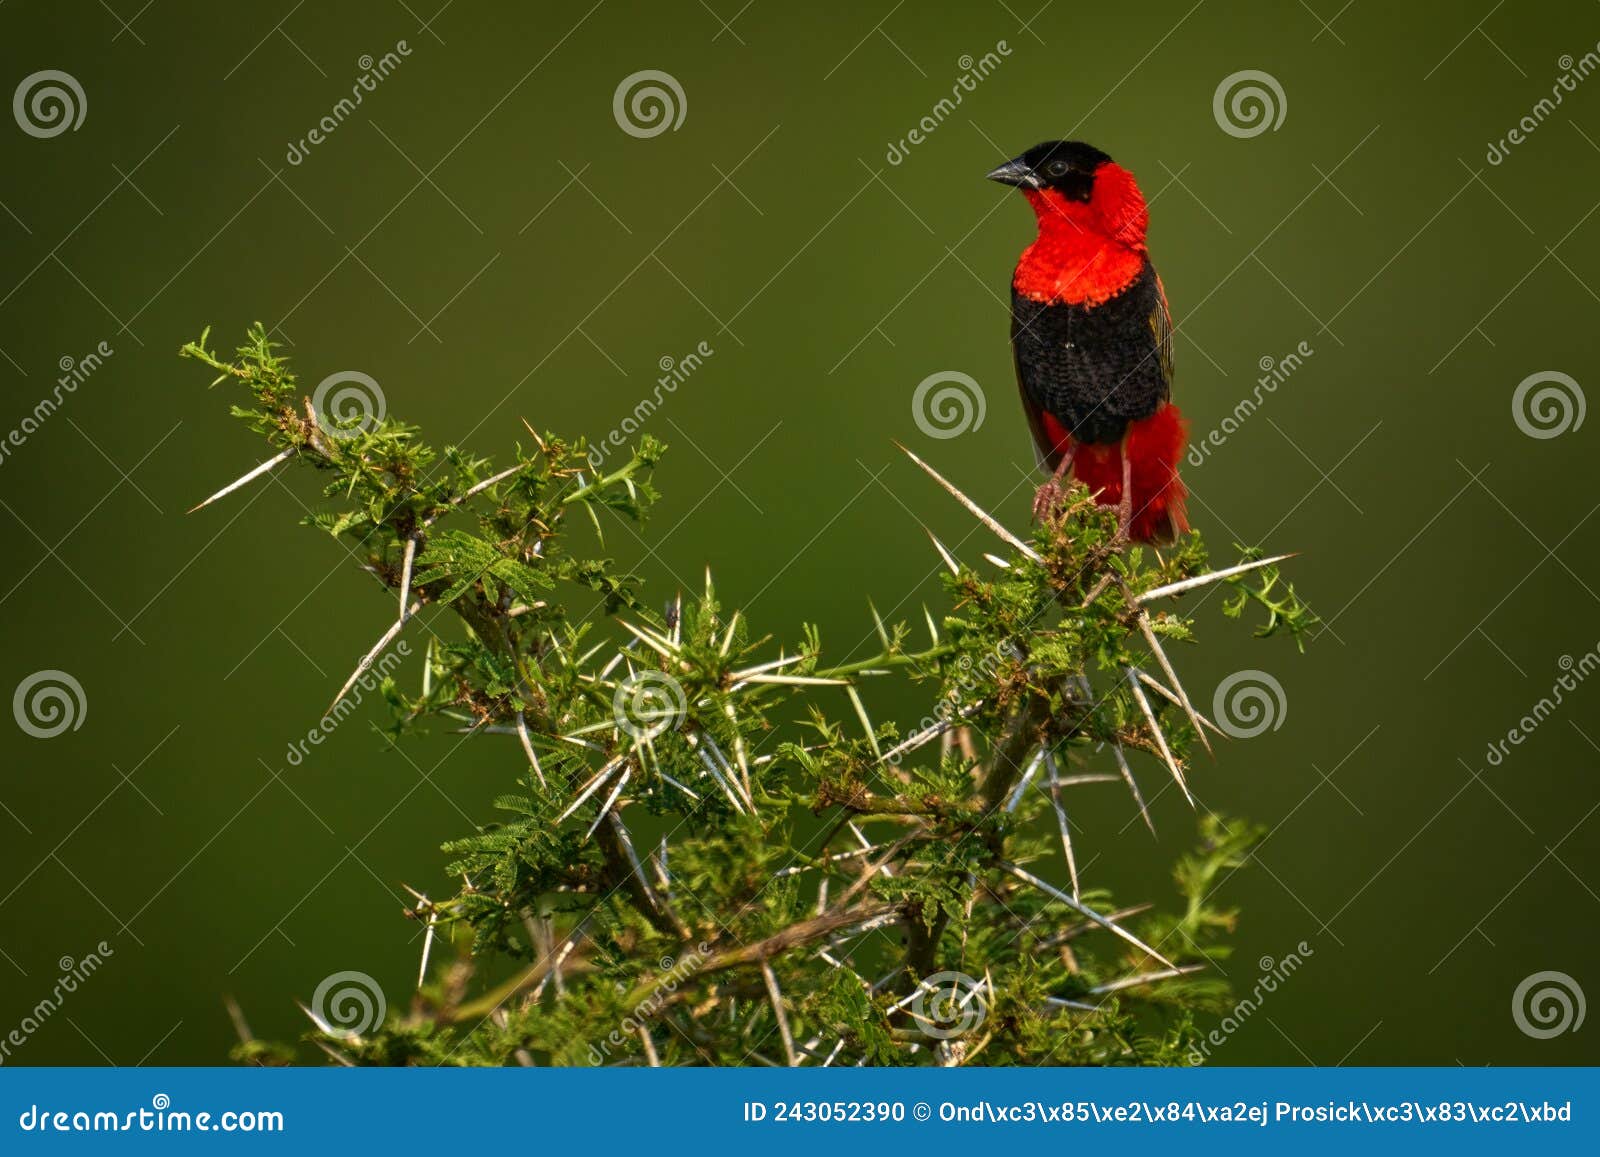 northern red bishop or orange bishop, euplectes franciscanus, red black bird sitting on the thorny prickly shrub bush. bird in the